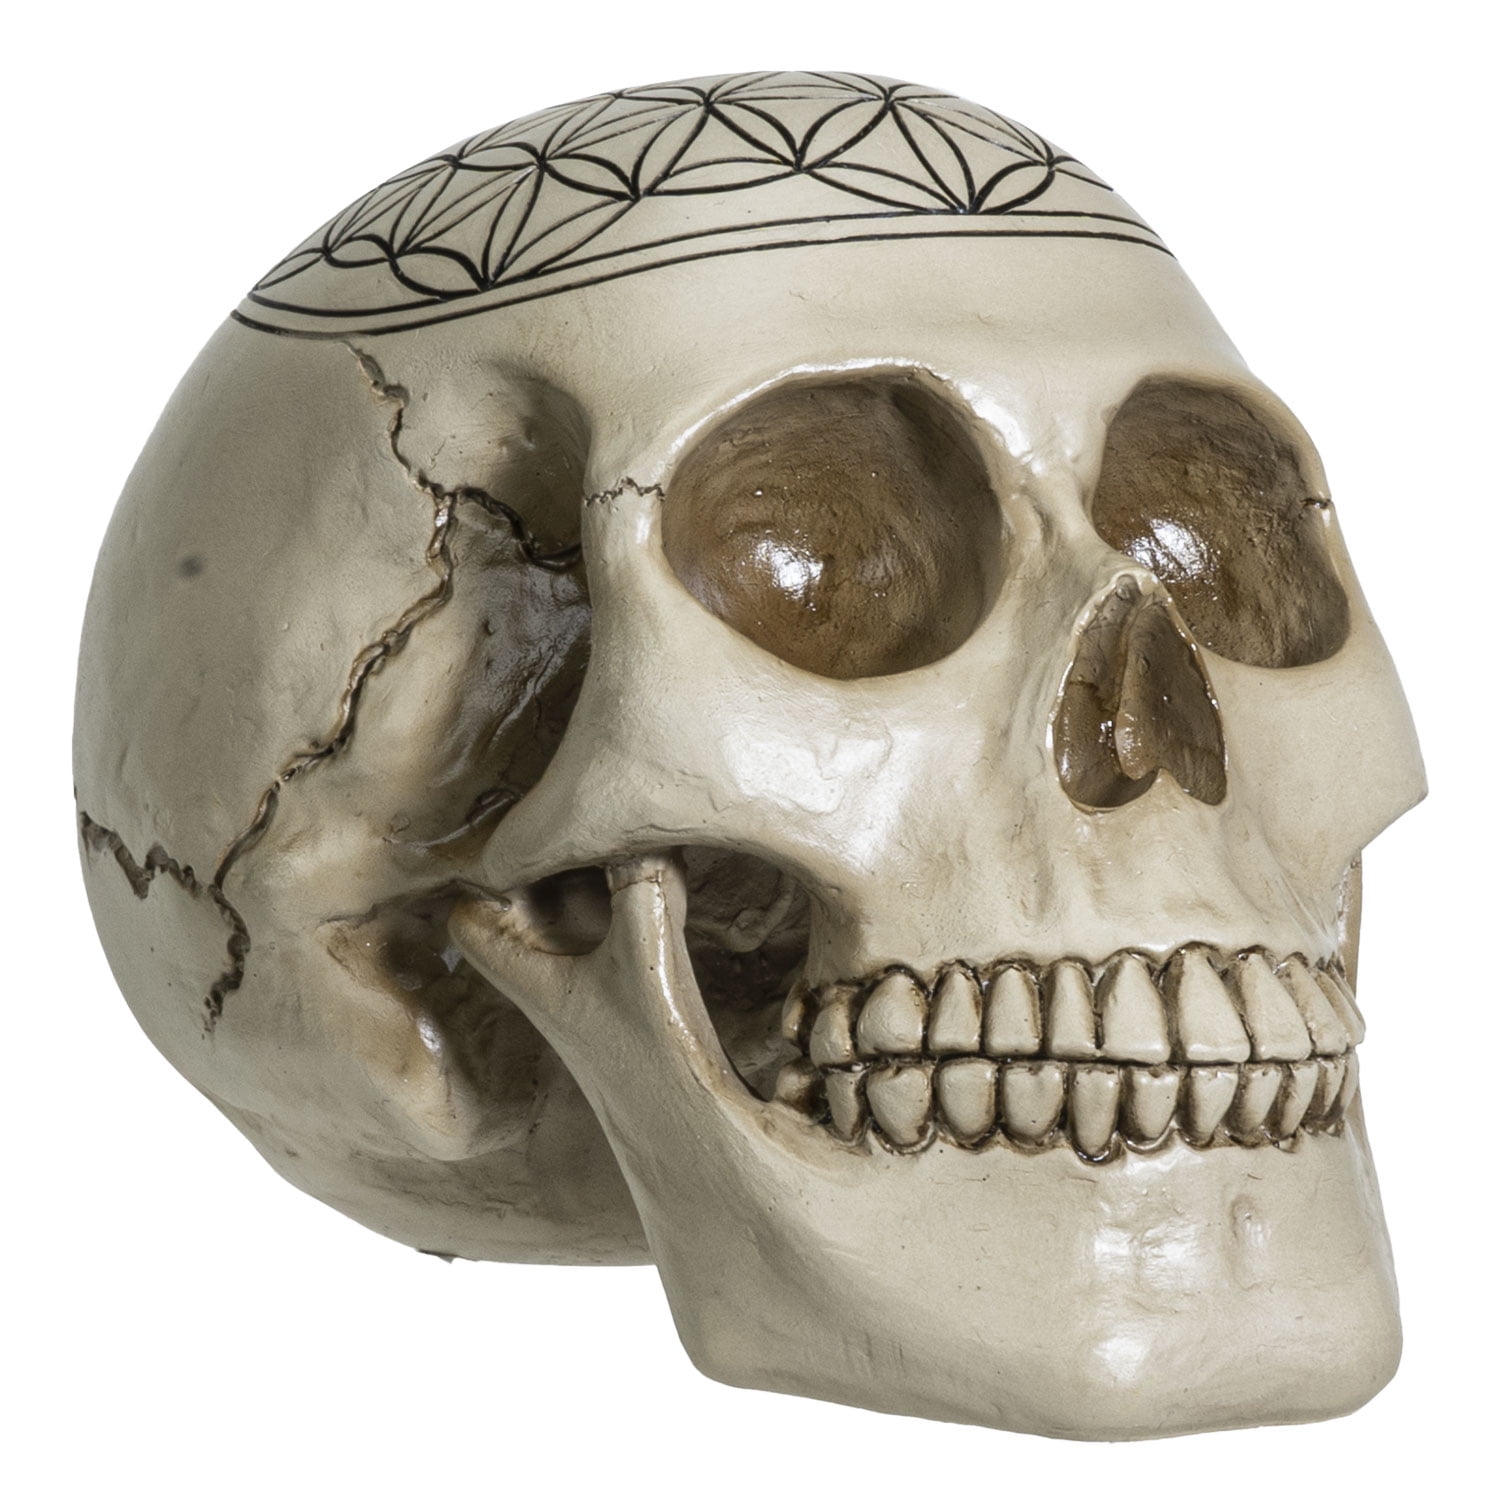 2" Translucent White Clear Skull Head Bust Figurine Figure Cool Project Idea 